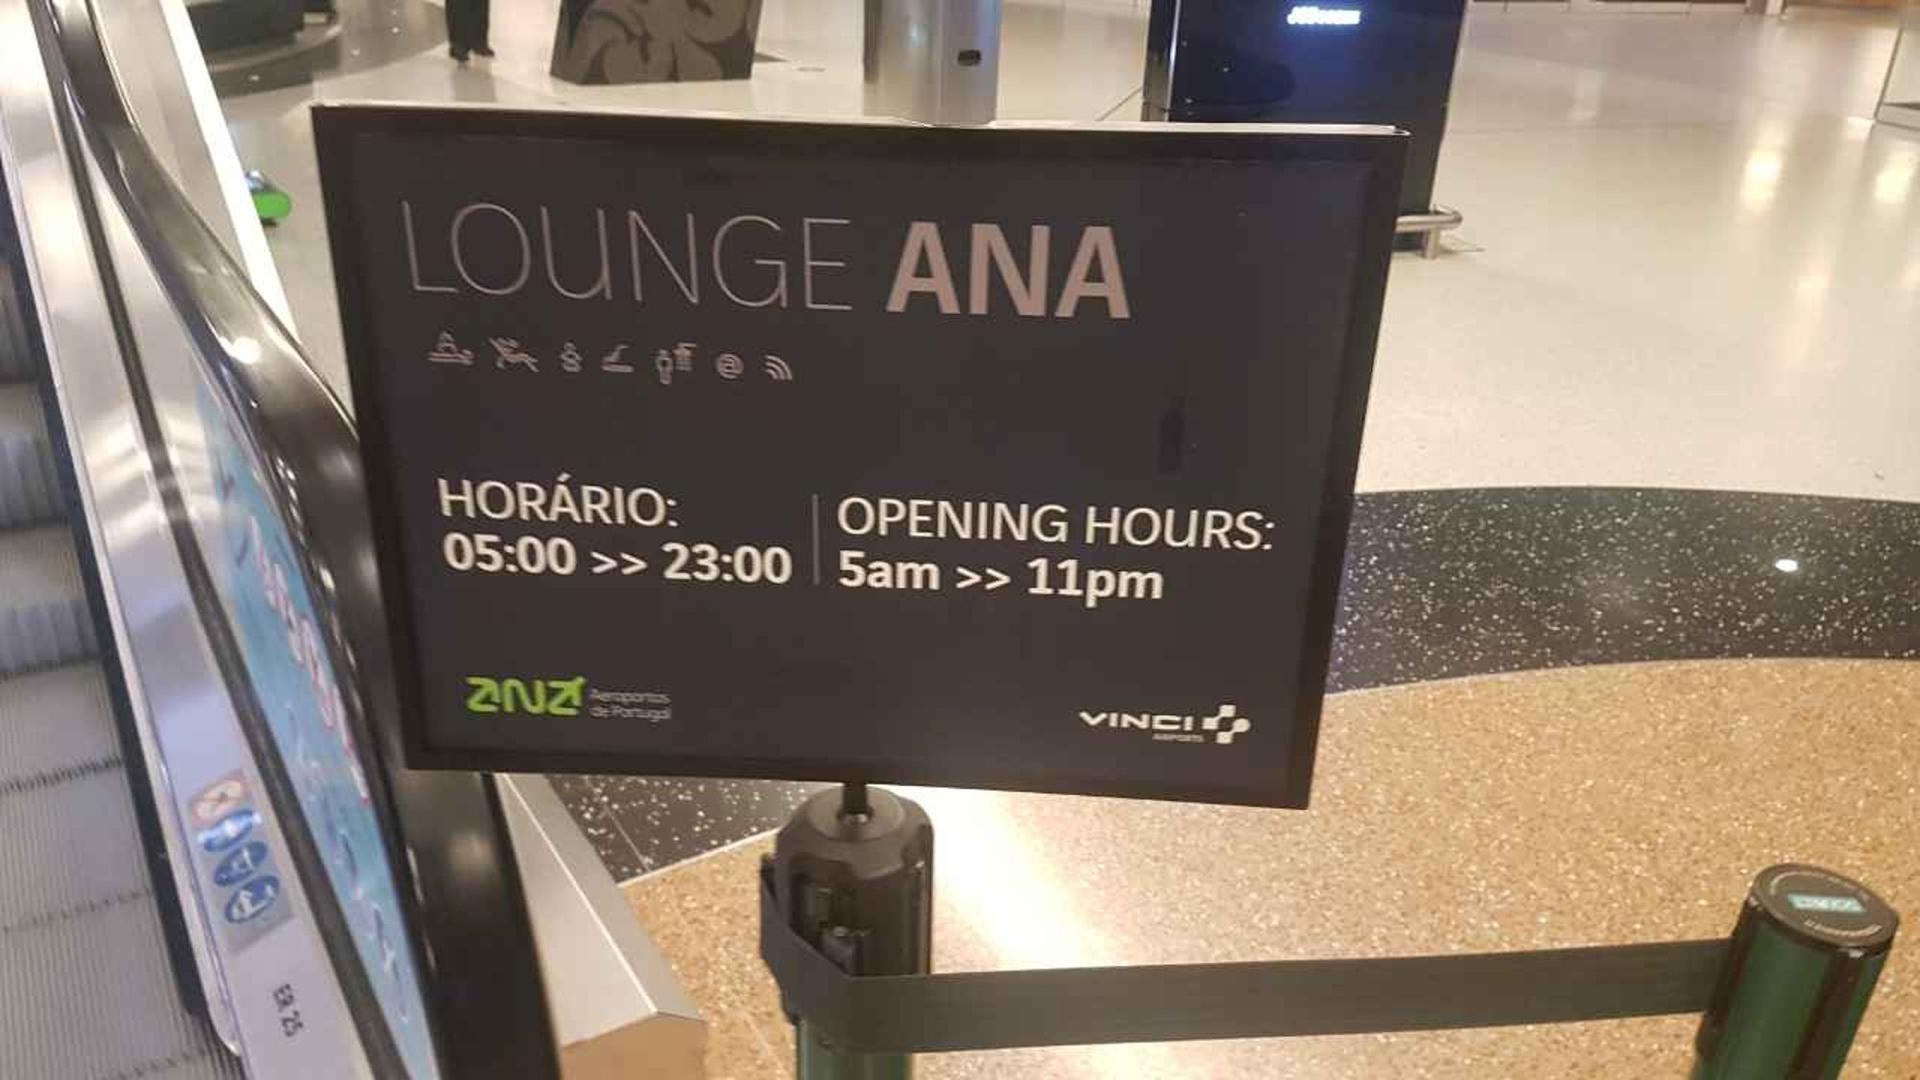 ANA Airport Lounge image 19 of 49